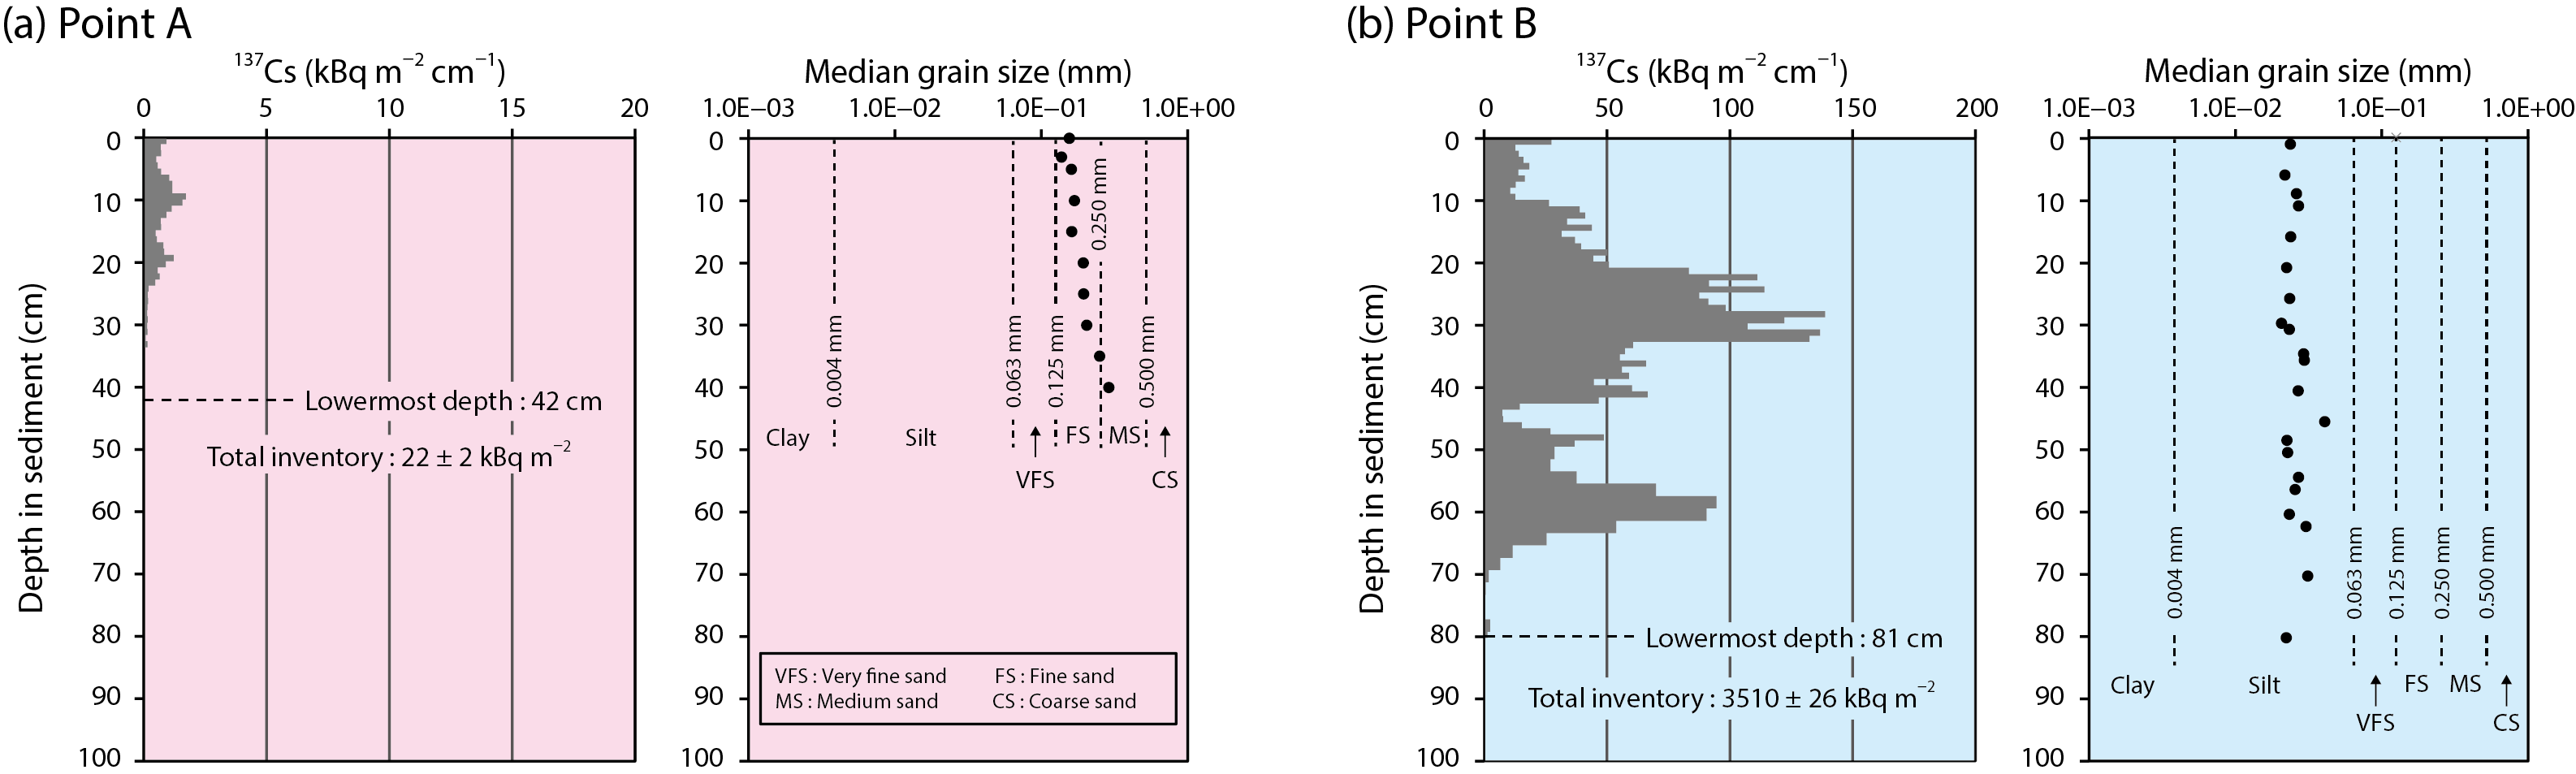 Fig.1-33  Vertical distribution of 137Cs activities (kBq m?2 cm?1), total inventory per unit (kBq m?2), and median grain size (D50) of samples collected via core-sampling method